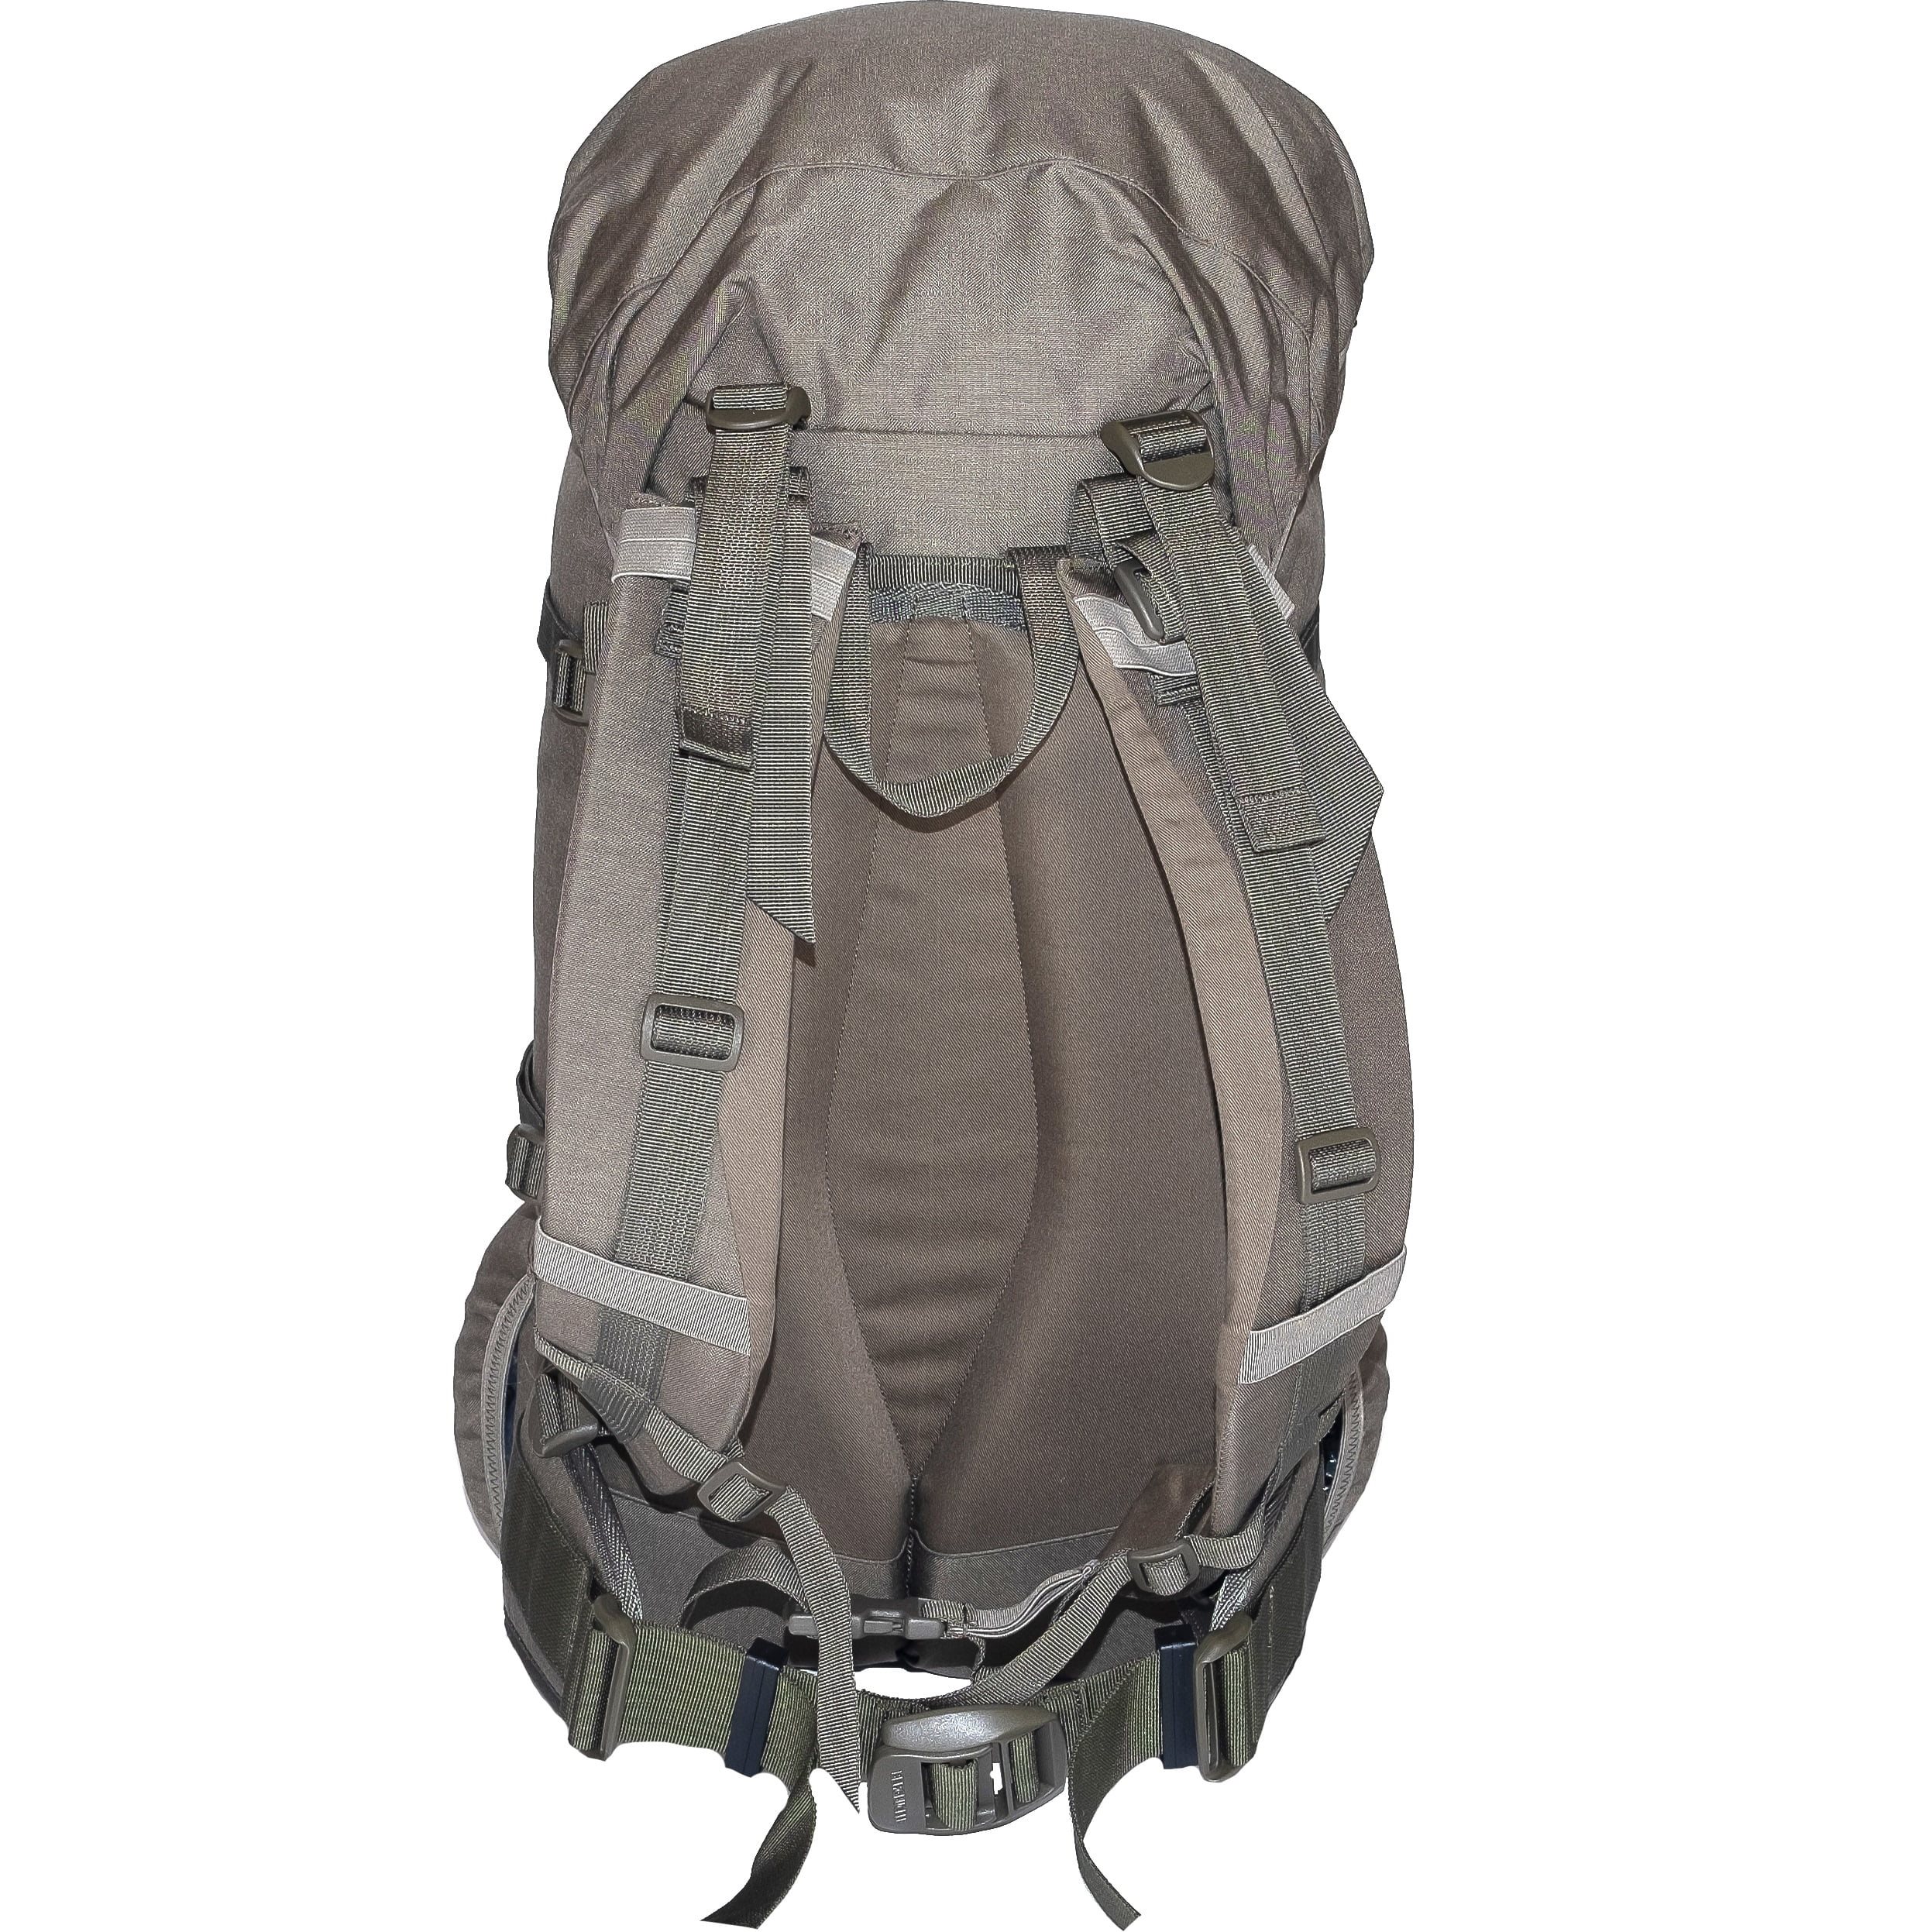 Backpack FLT HEROS 45 FA IR STONE GREY OLIVE Berghaus LV00140SGO L-11